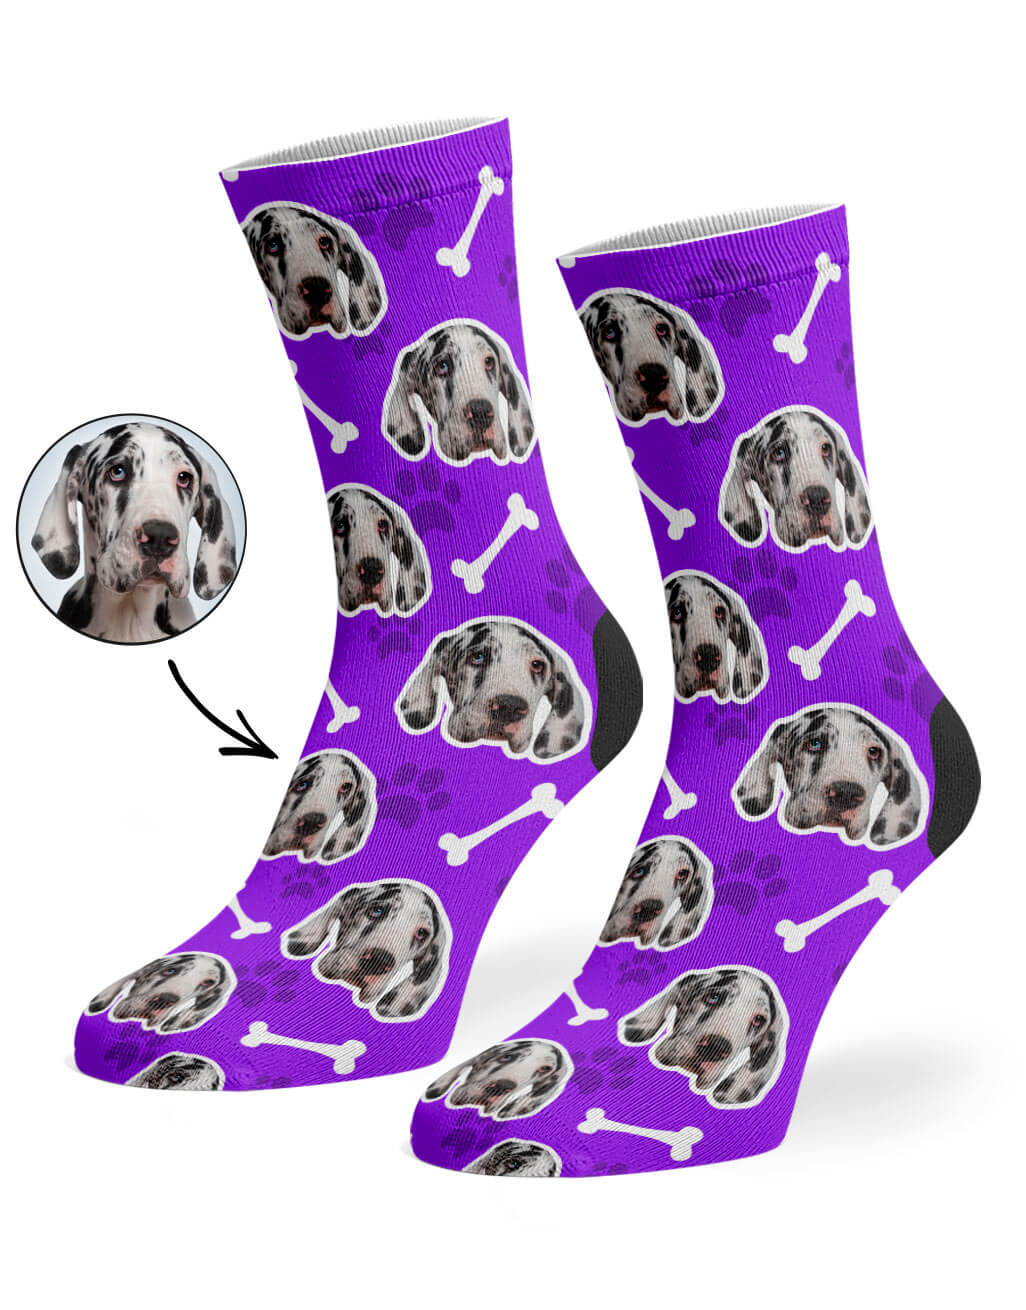 custom socks with your dog on